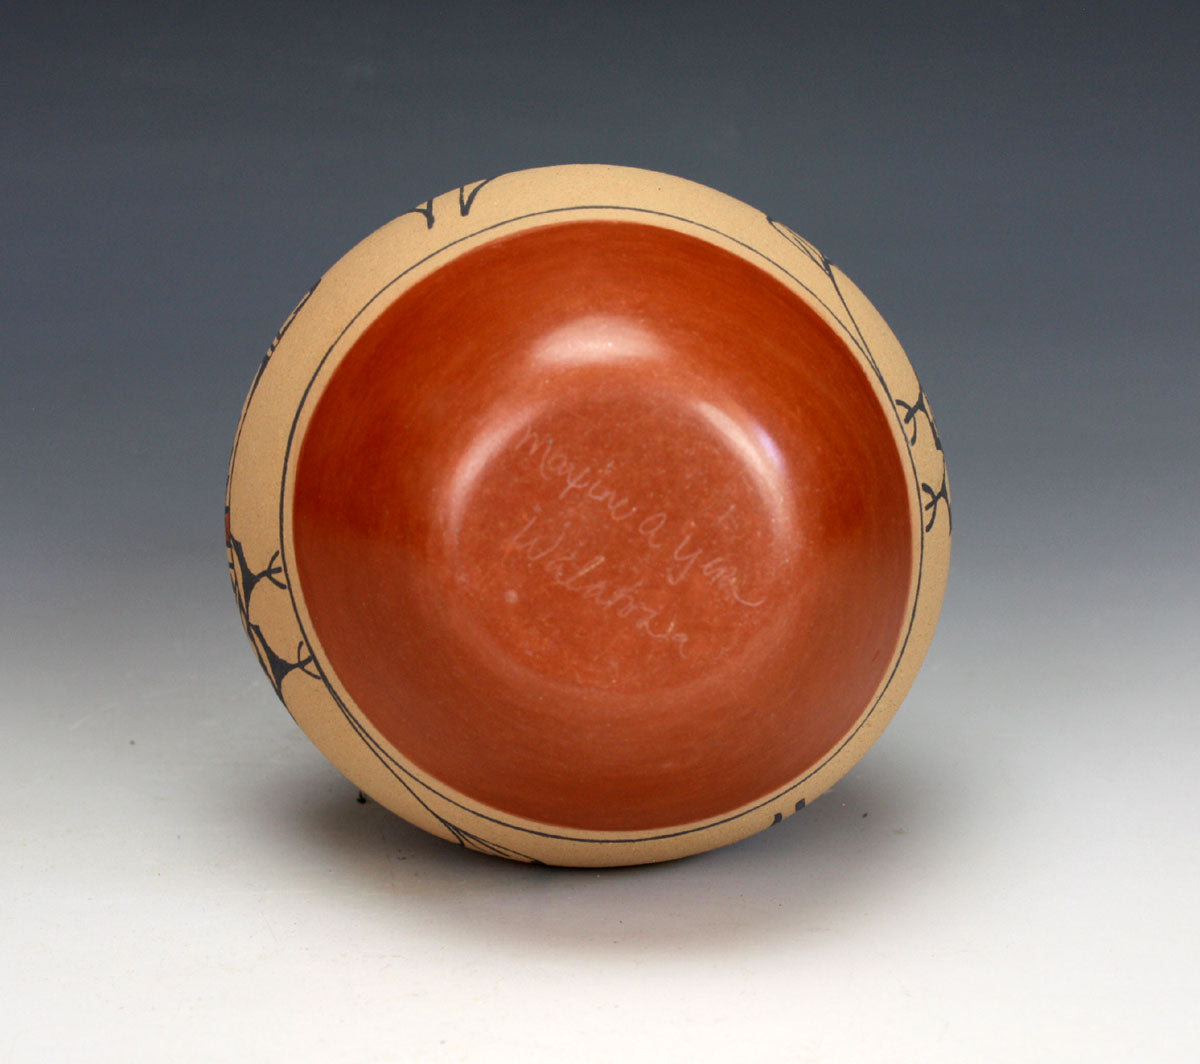 Jemez Pueblo American Indian Pottery Polychrome Vase #1 - Maxine Yepa